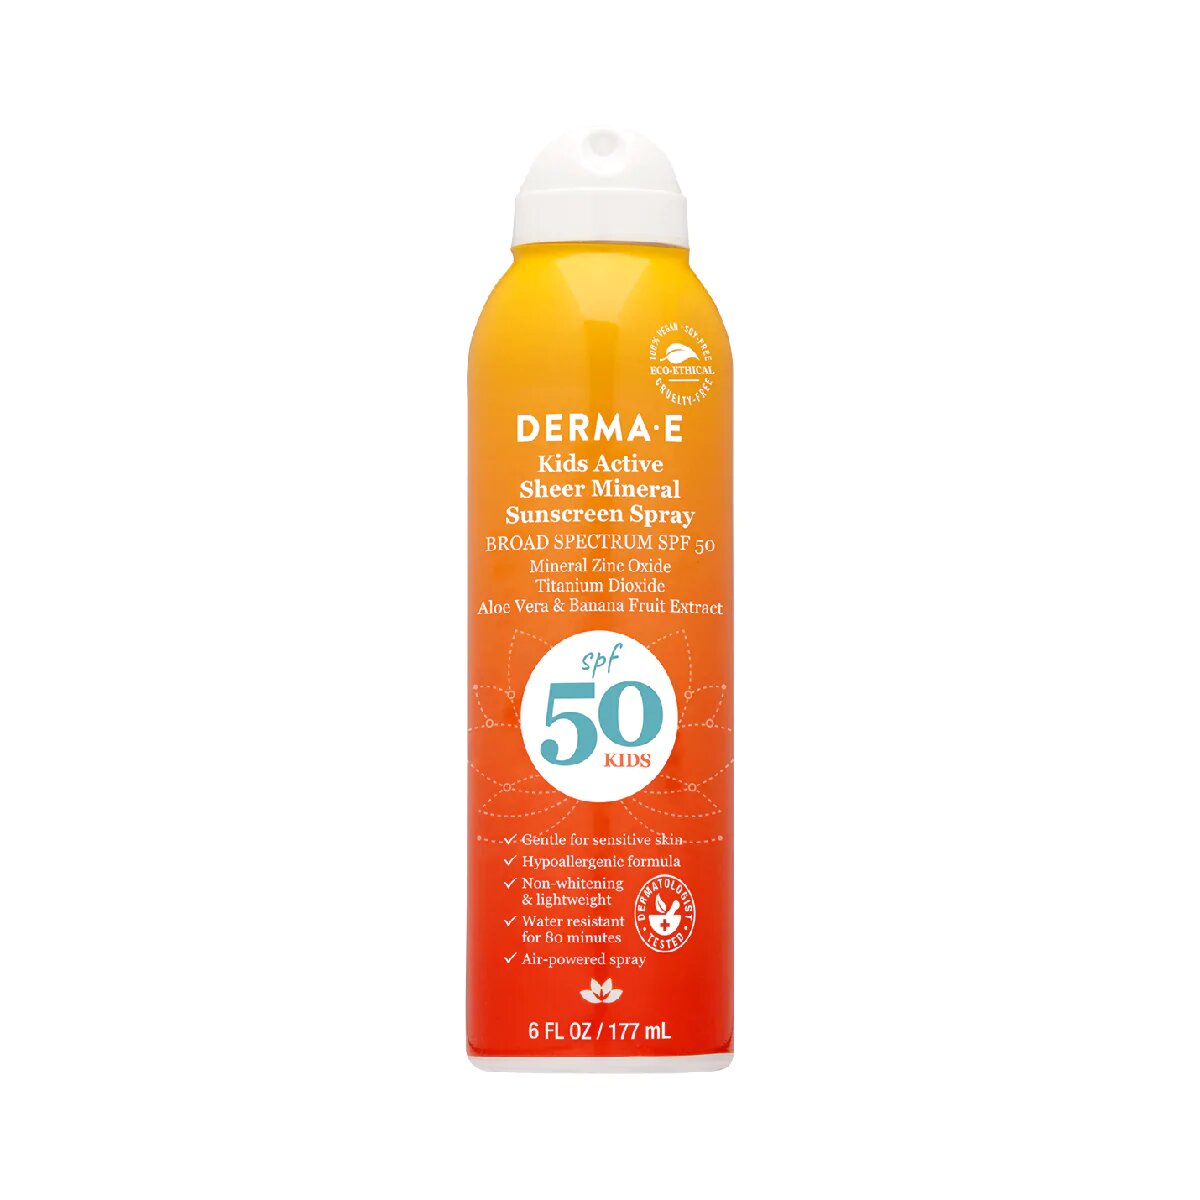 DERMA-E Kids Active Sheer Mineral Sunscreen Spray